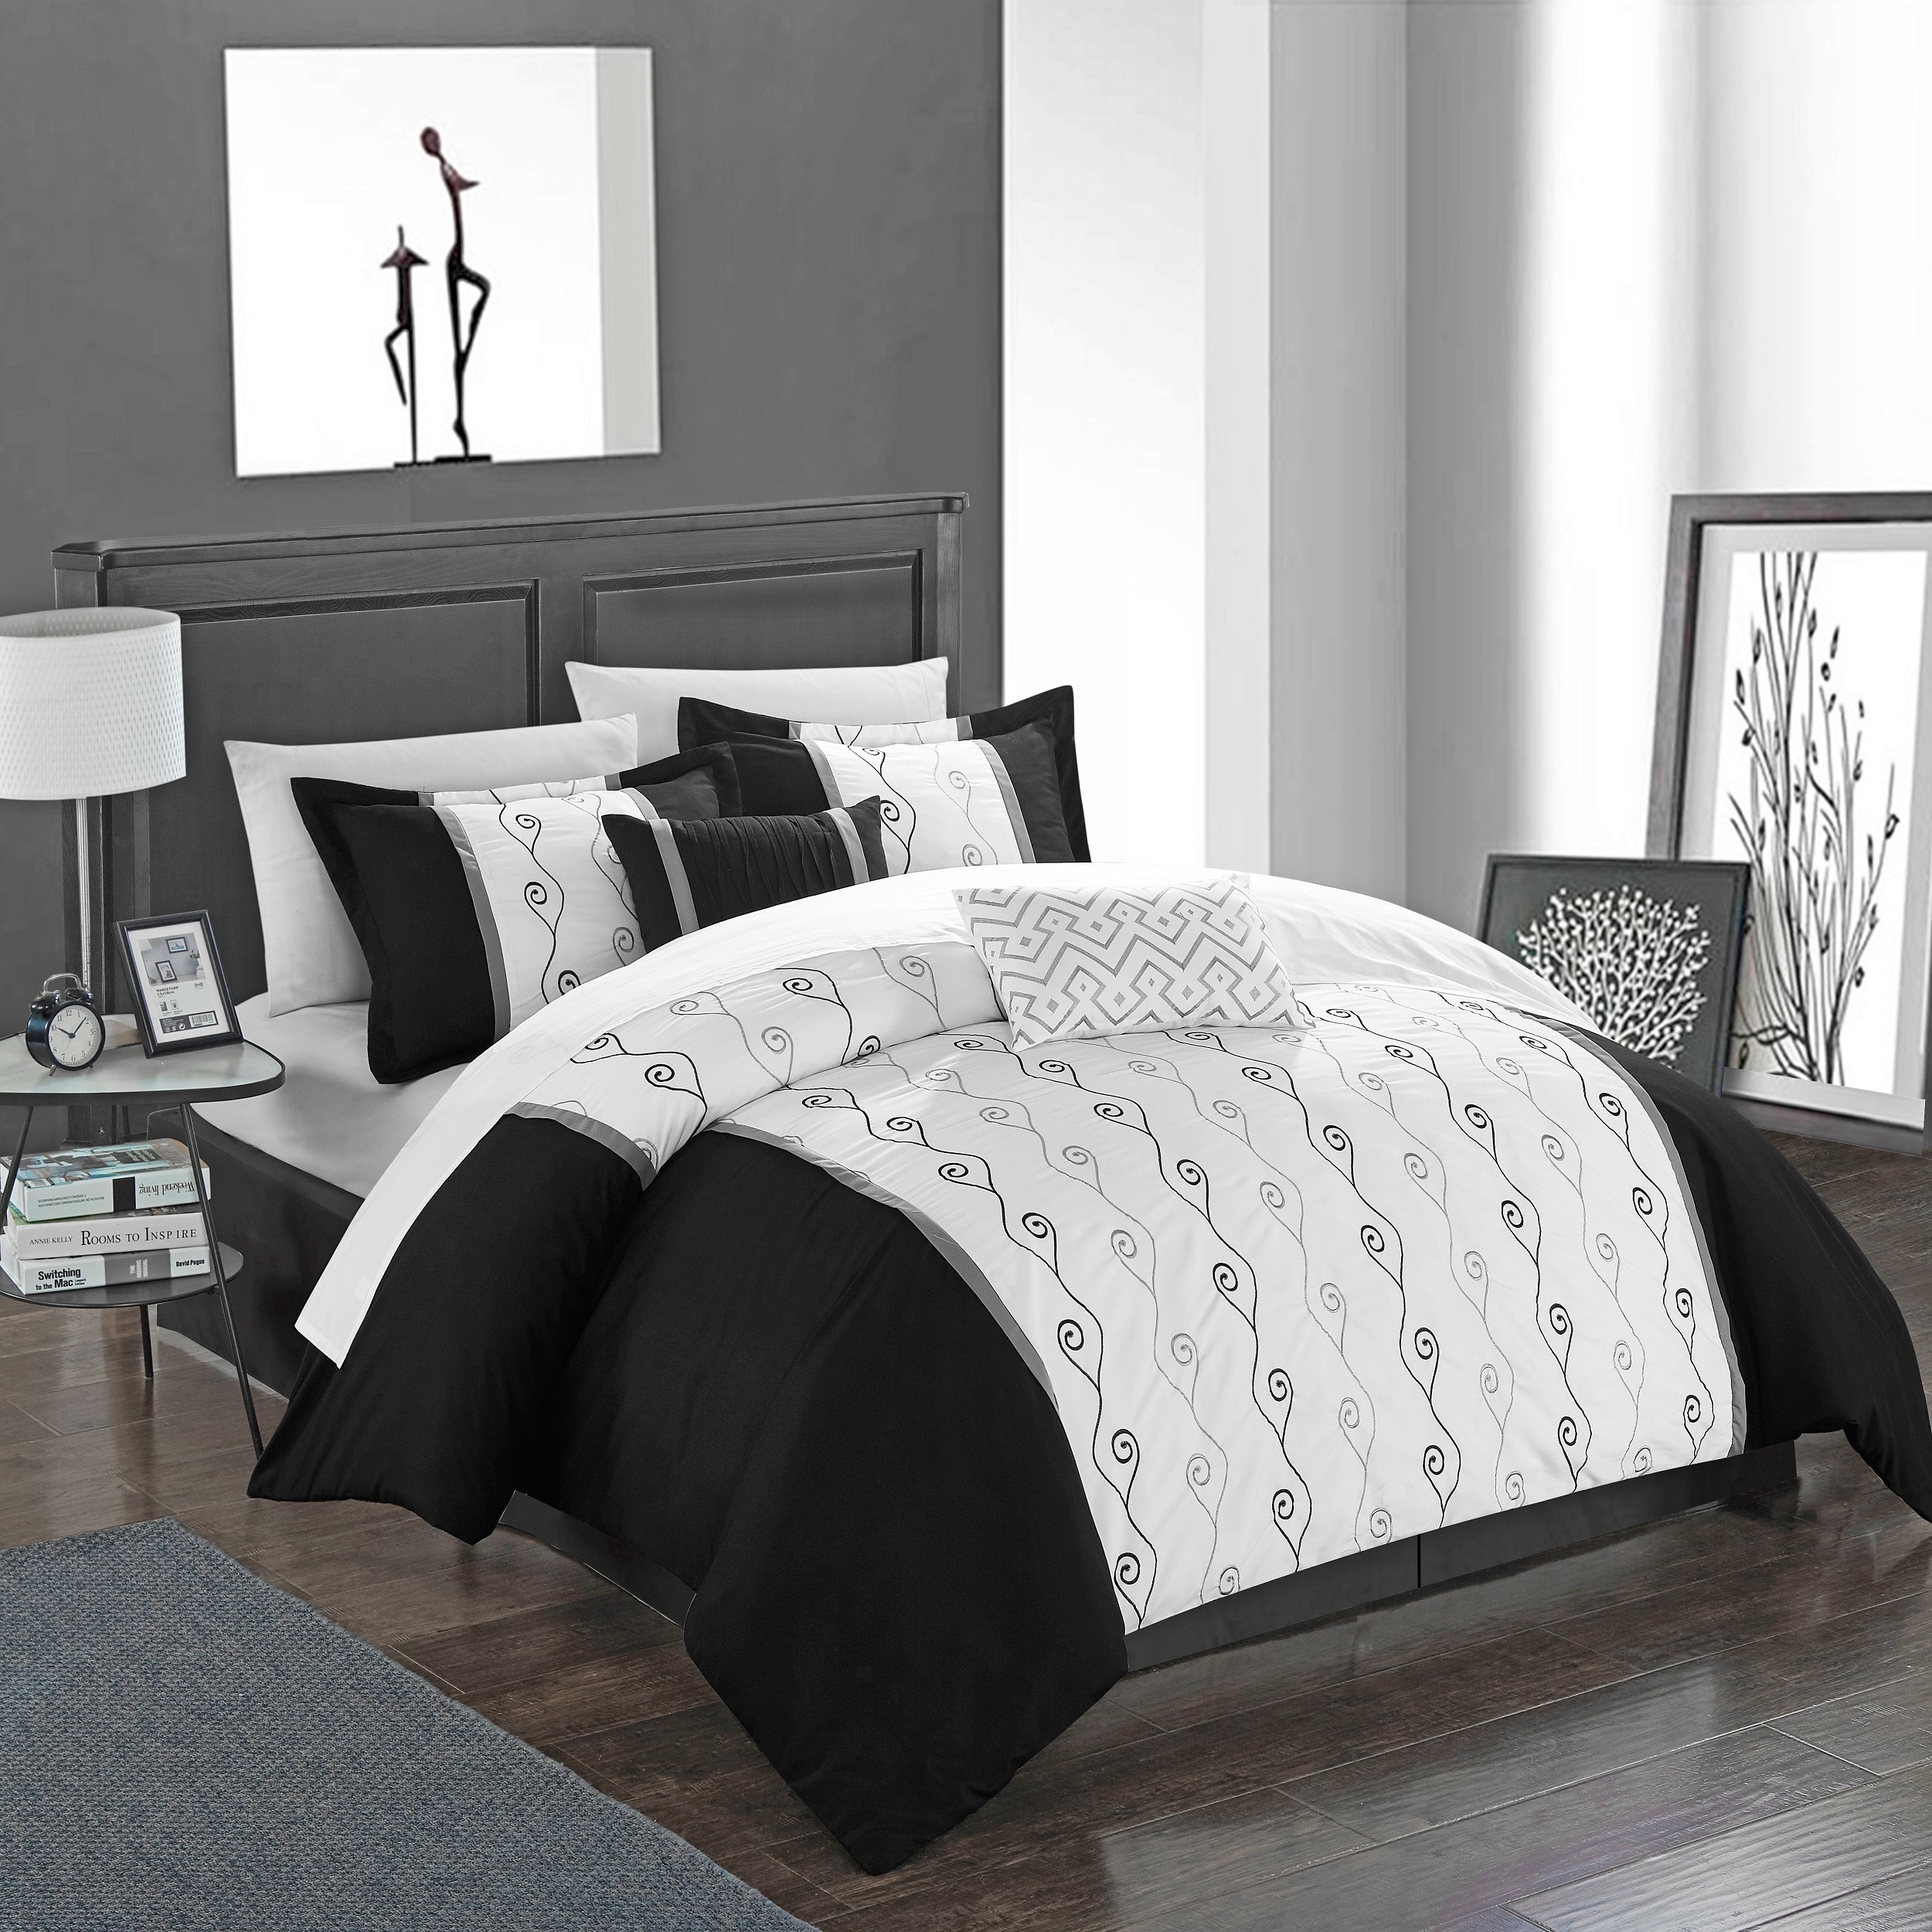 Lystra 6 Piece Comforter Set Color Block Embroidered Bed In A Bag Bedding - Black, King